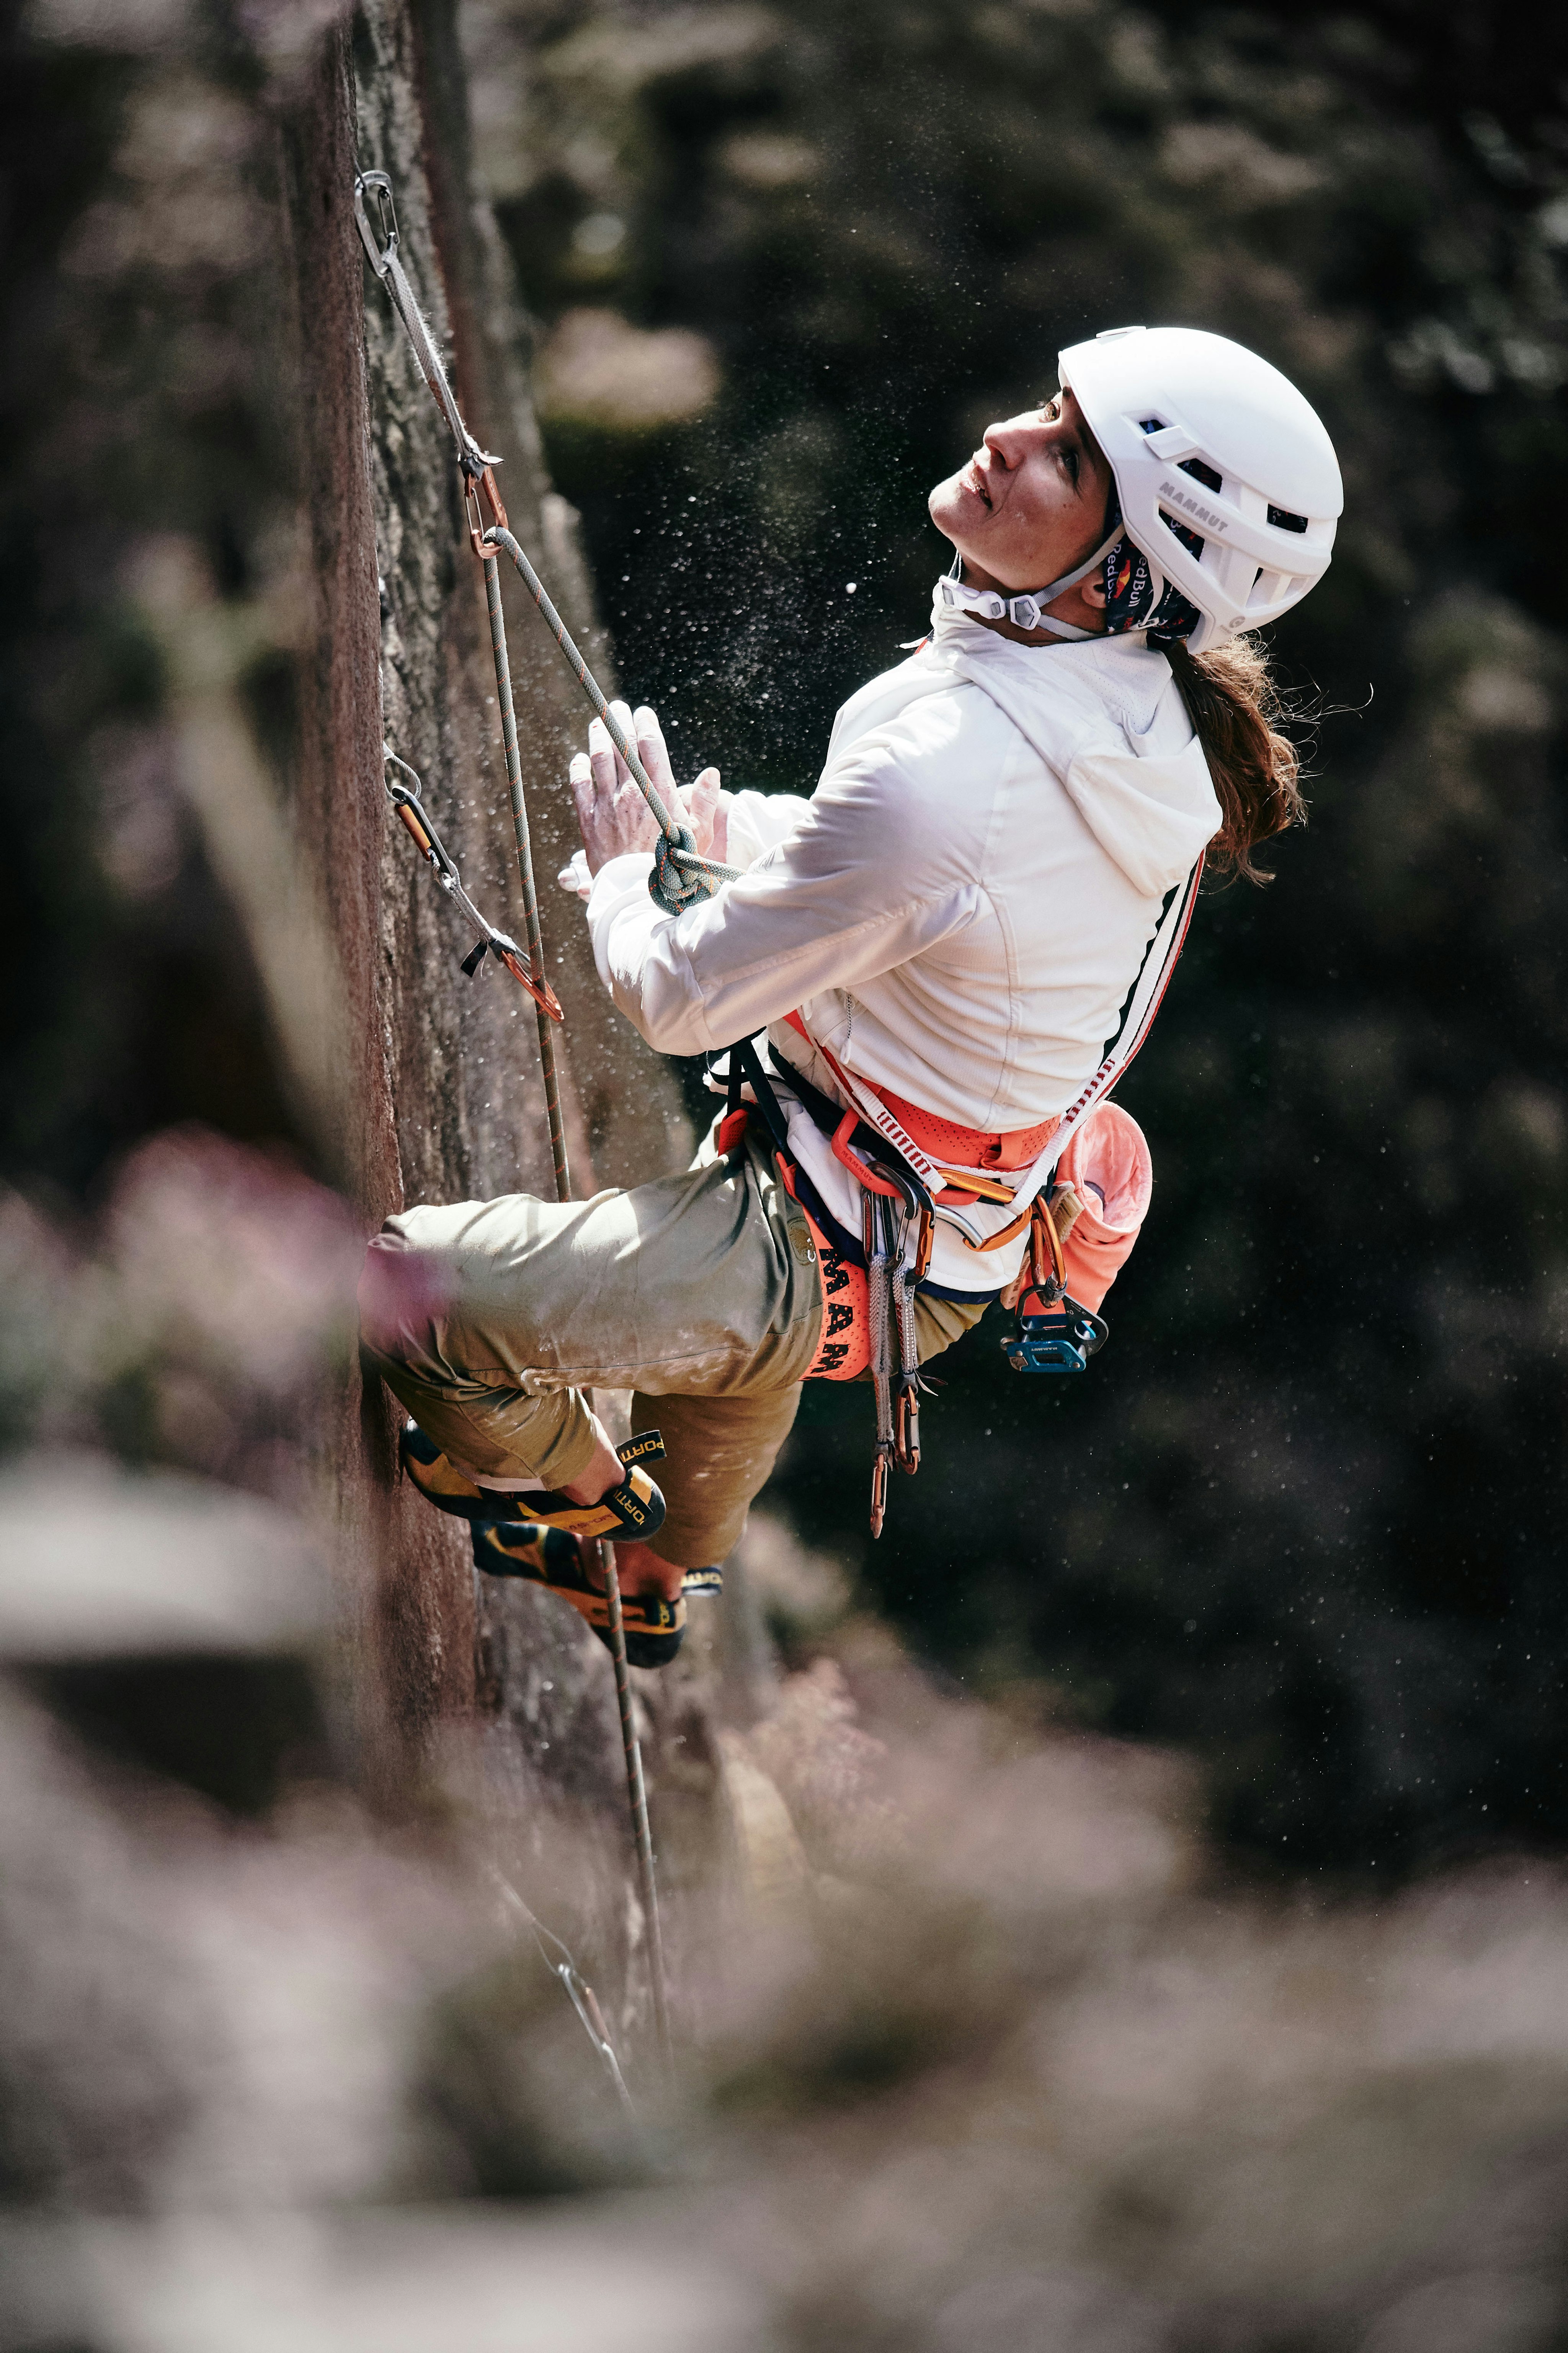 Woman climbing a rock wall and looking upwards